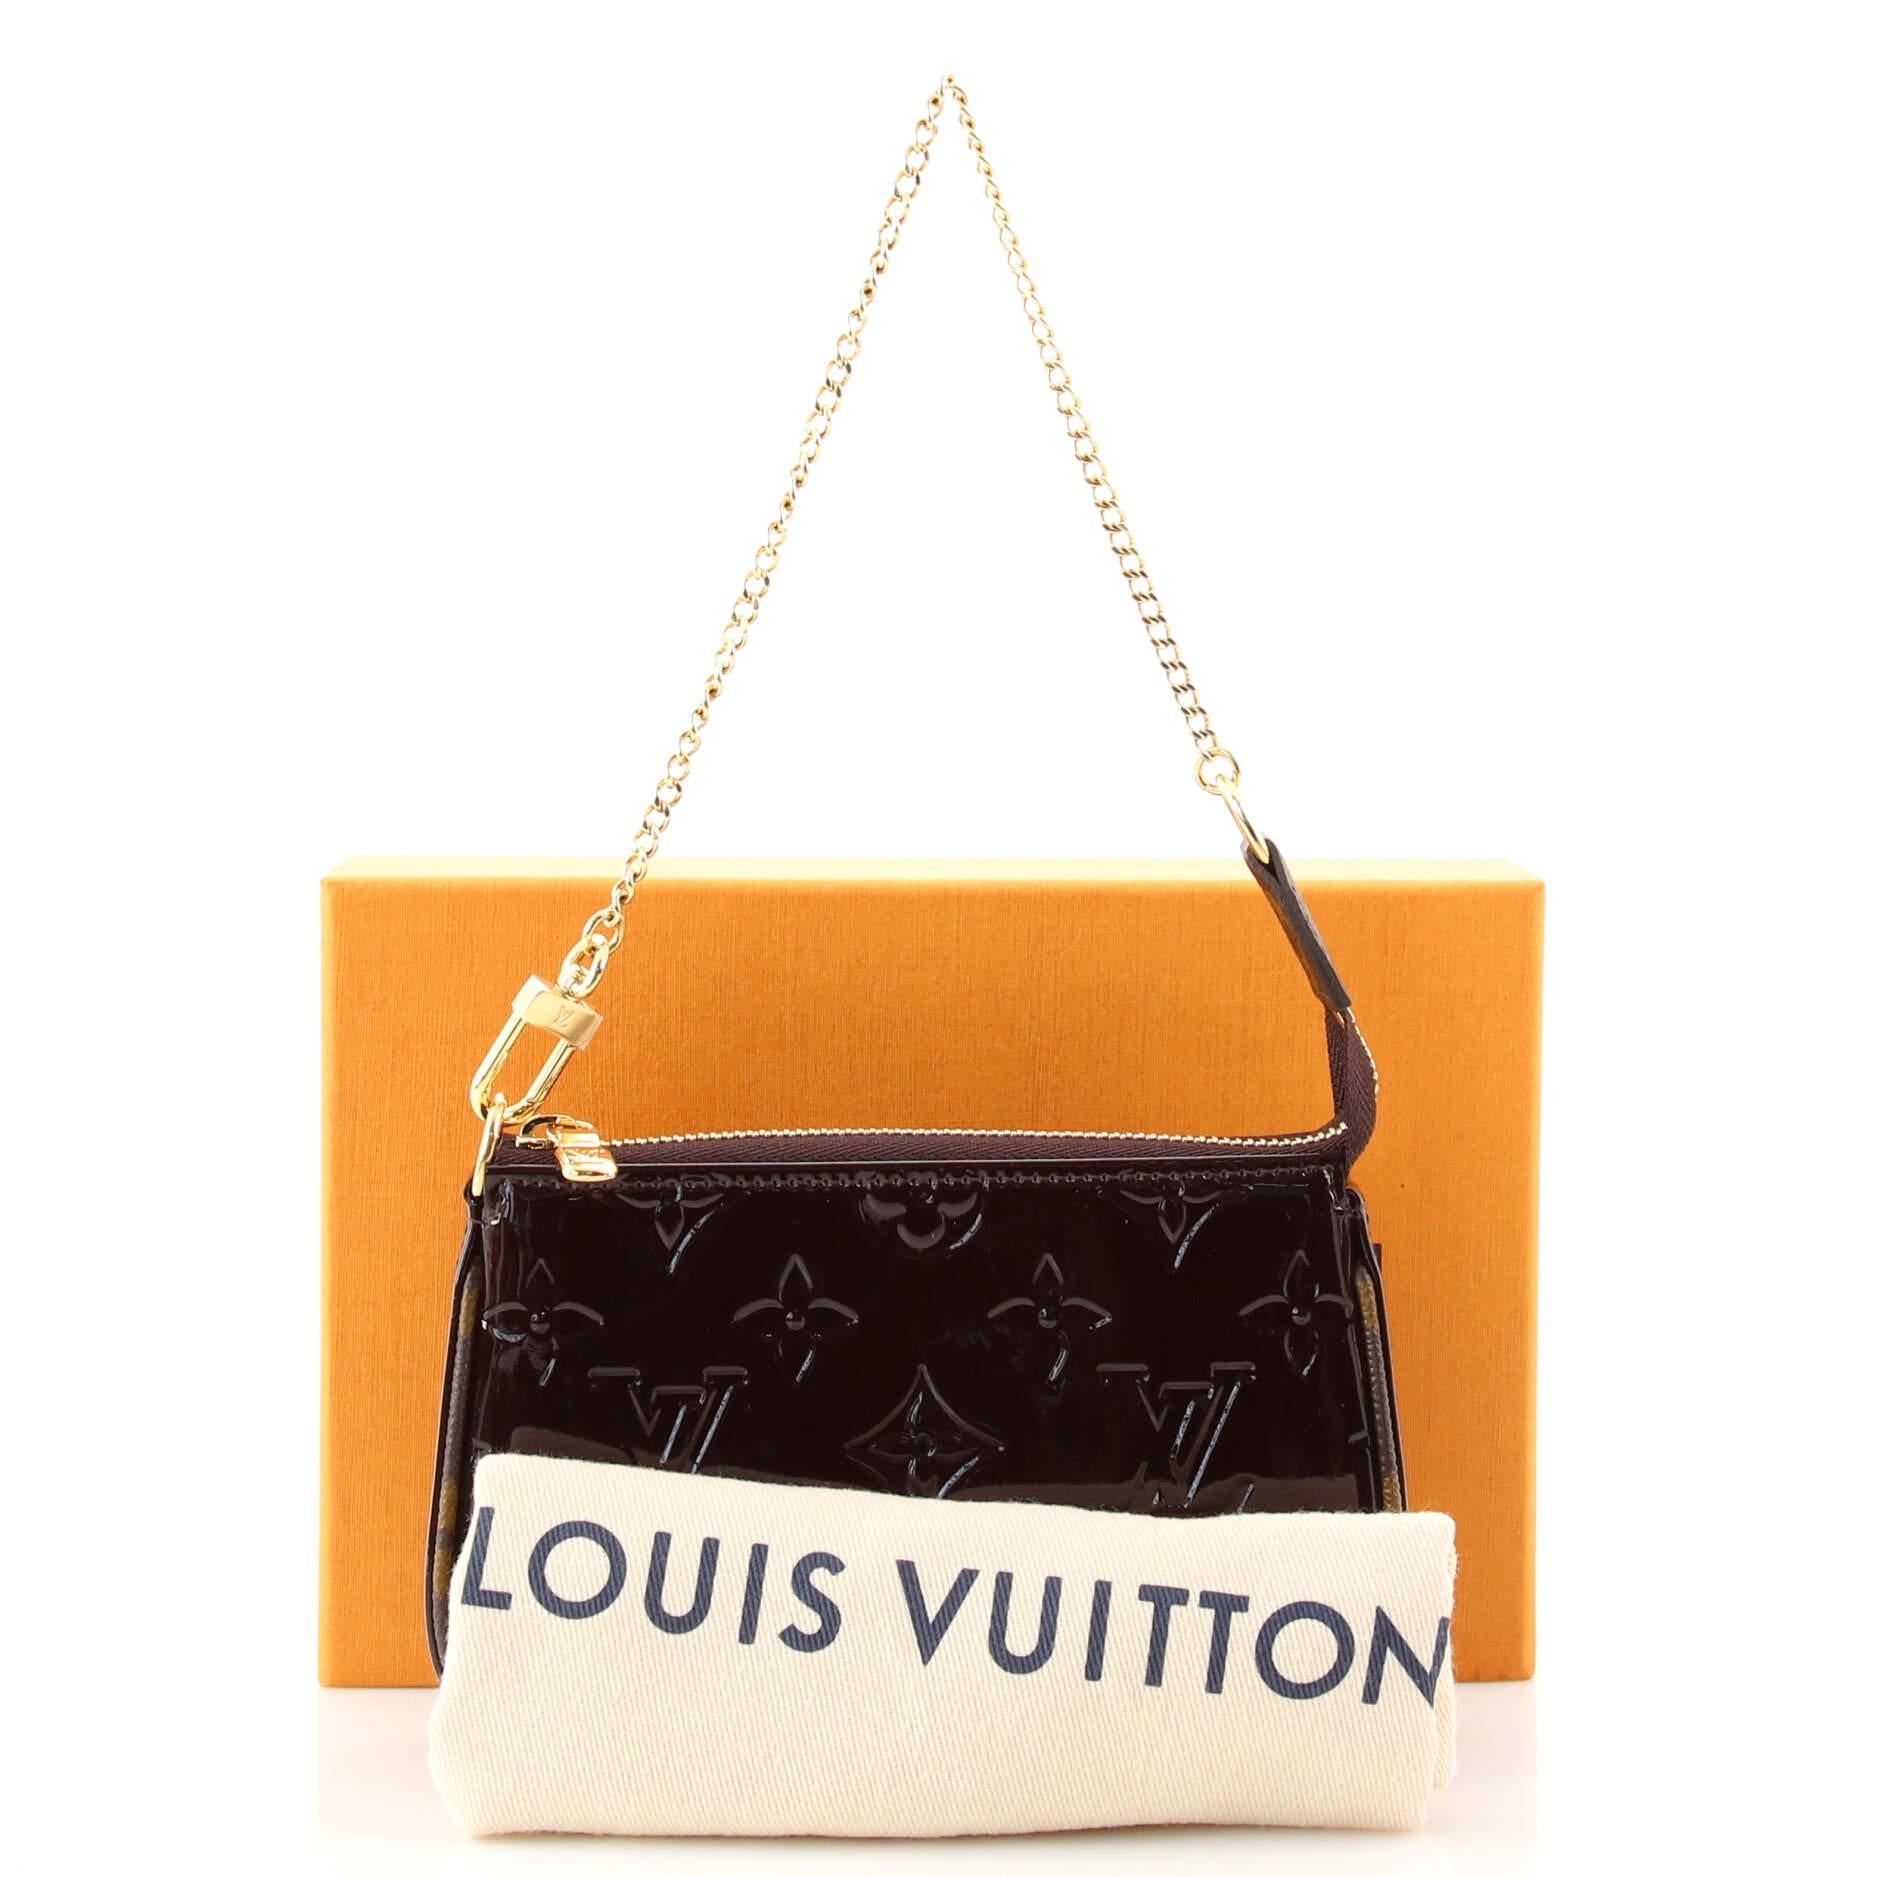 Louis Vuitton Black Limited Edition Monogram Vernis Fascination